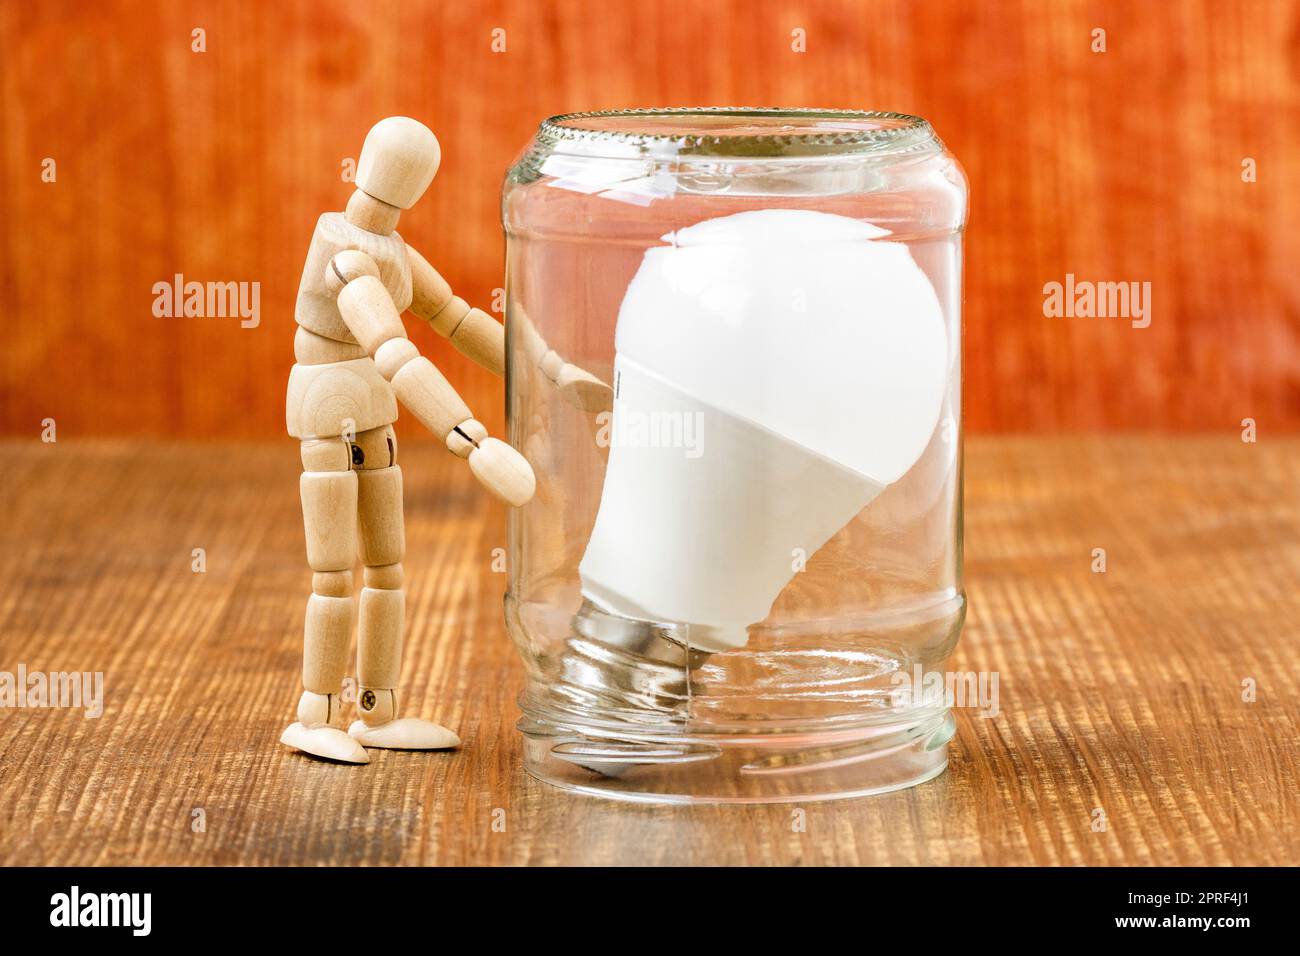 Dummy standing next to light bulb inside glass jar Stock Photo